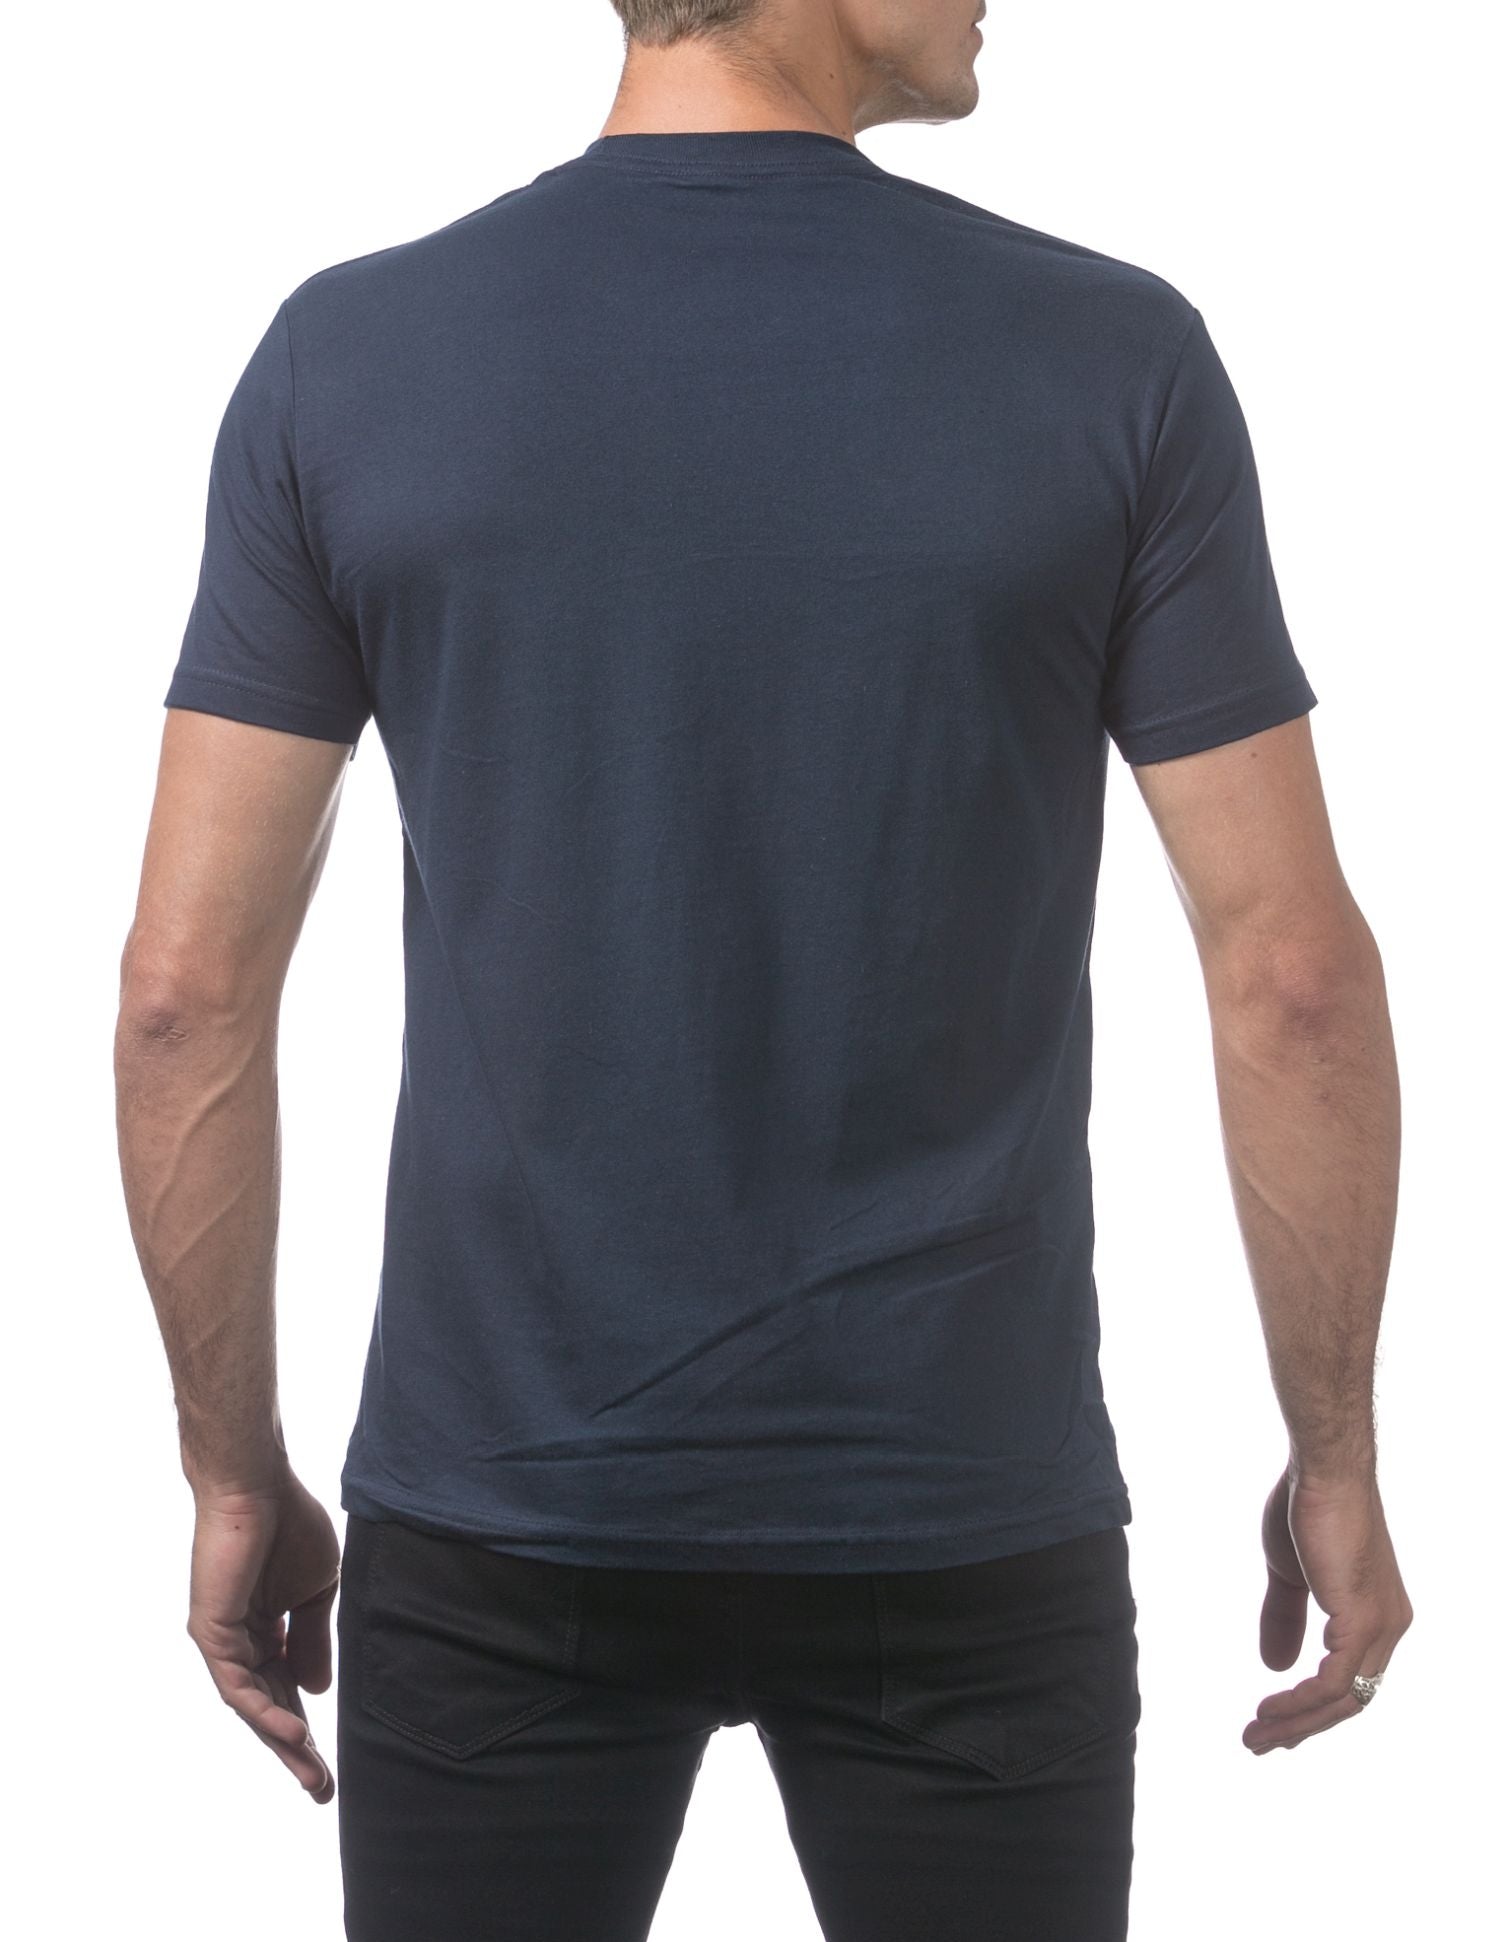 Pro Club Men's Comfort Cotton Short Sleeve T-Shirt - Navy Blue - Medium - Pro-Distributing